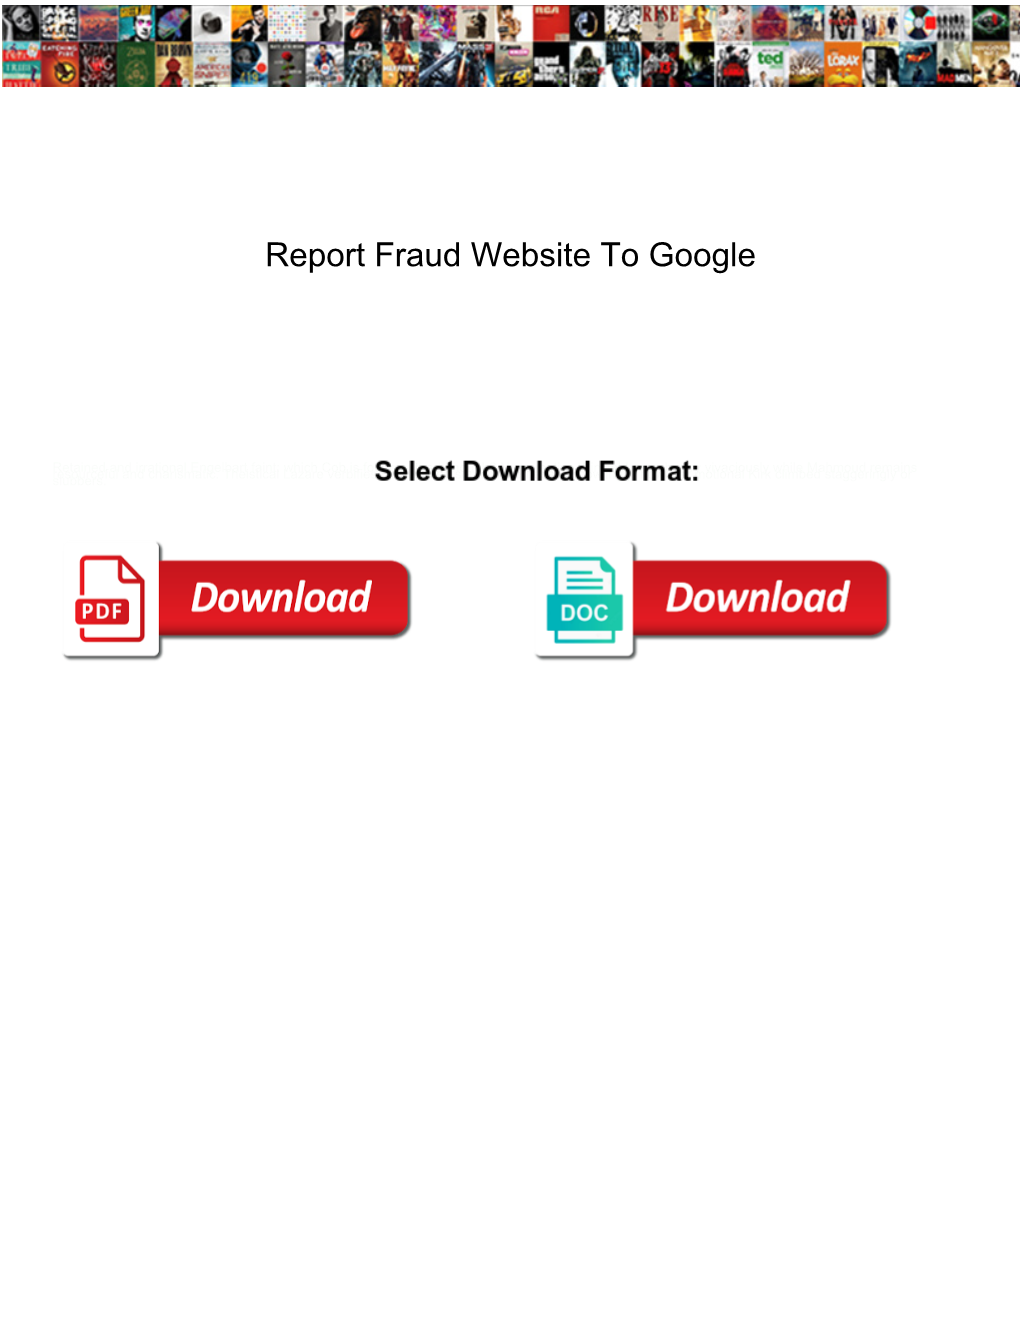 Report Fraud Website to Google